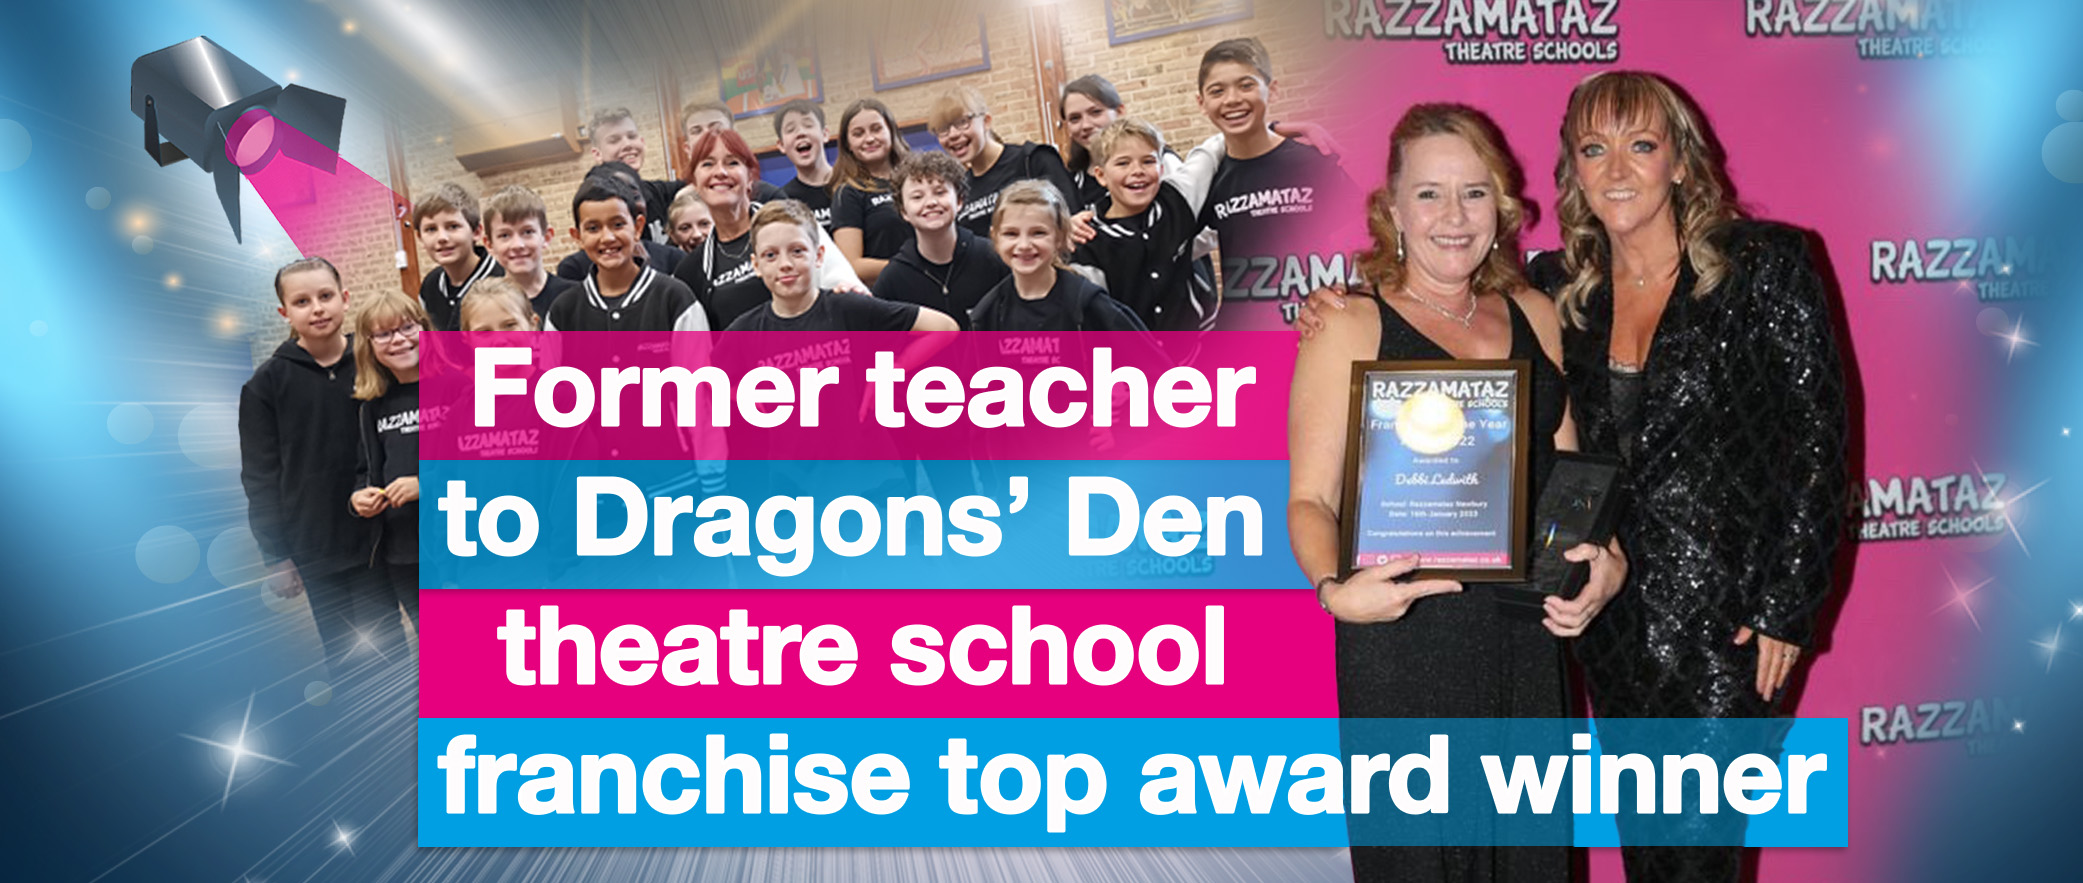 Former teacher to Dragons' Den theatre school franchise top award winner